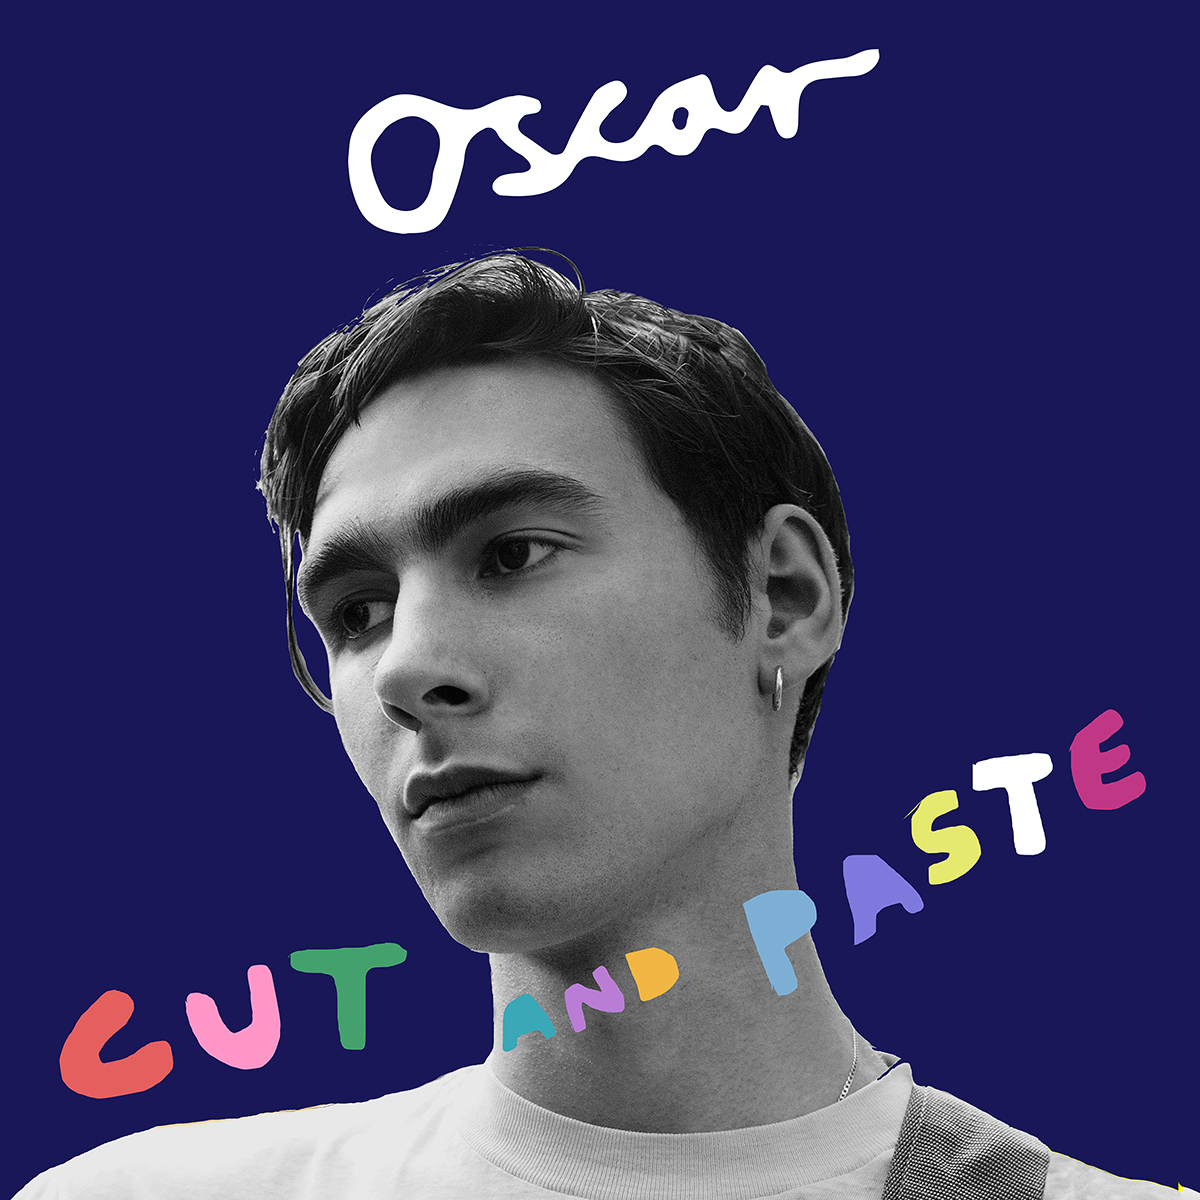 Oscar « Cut and paste »